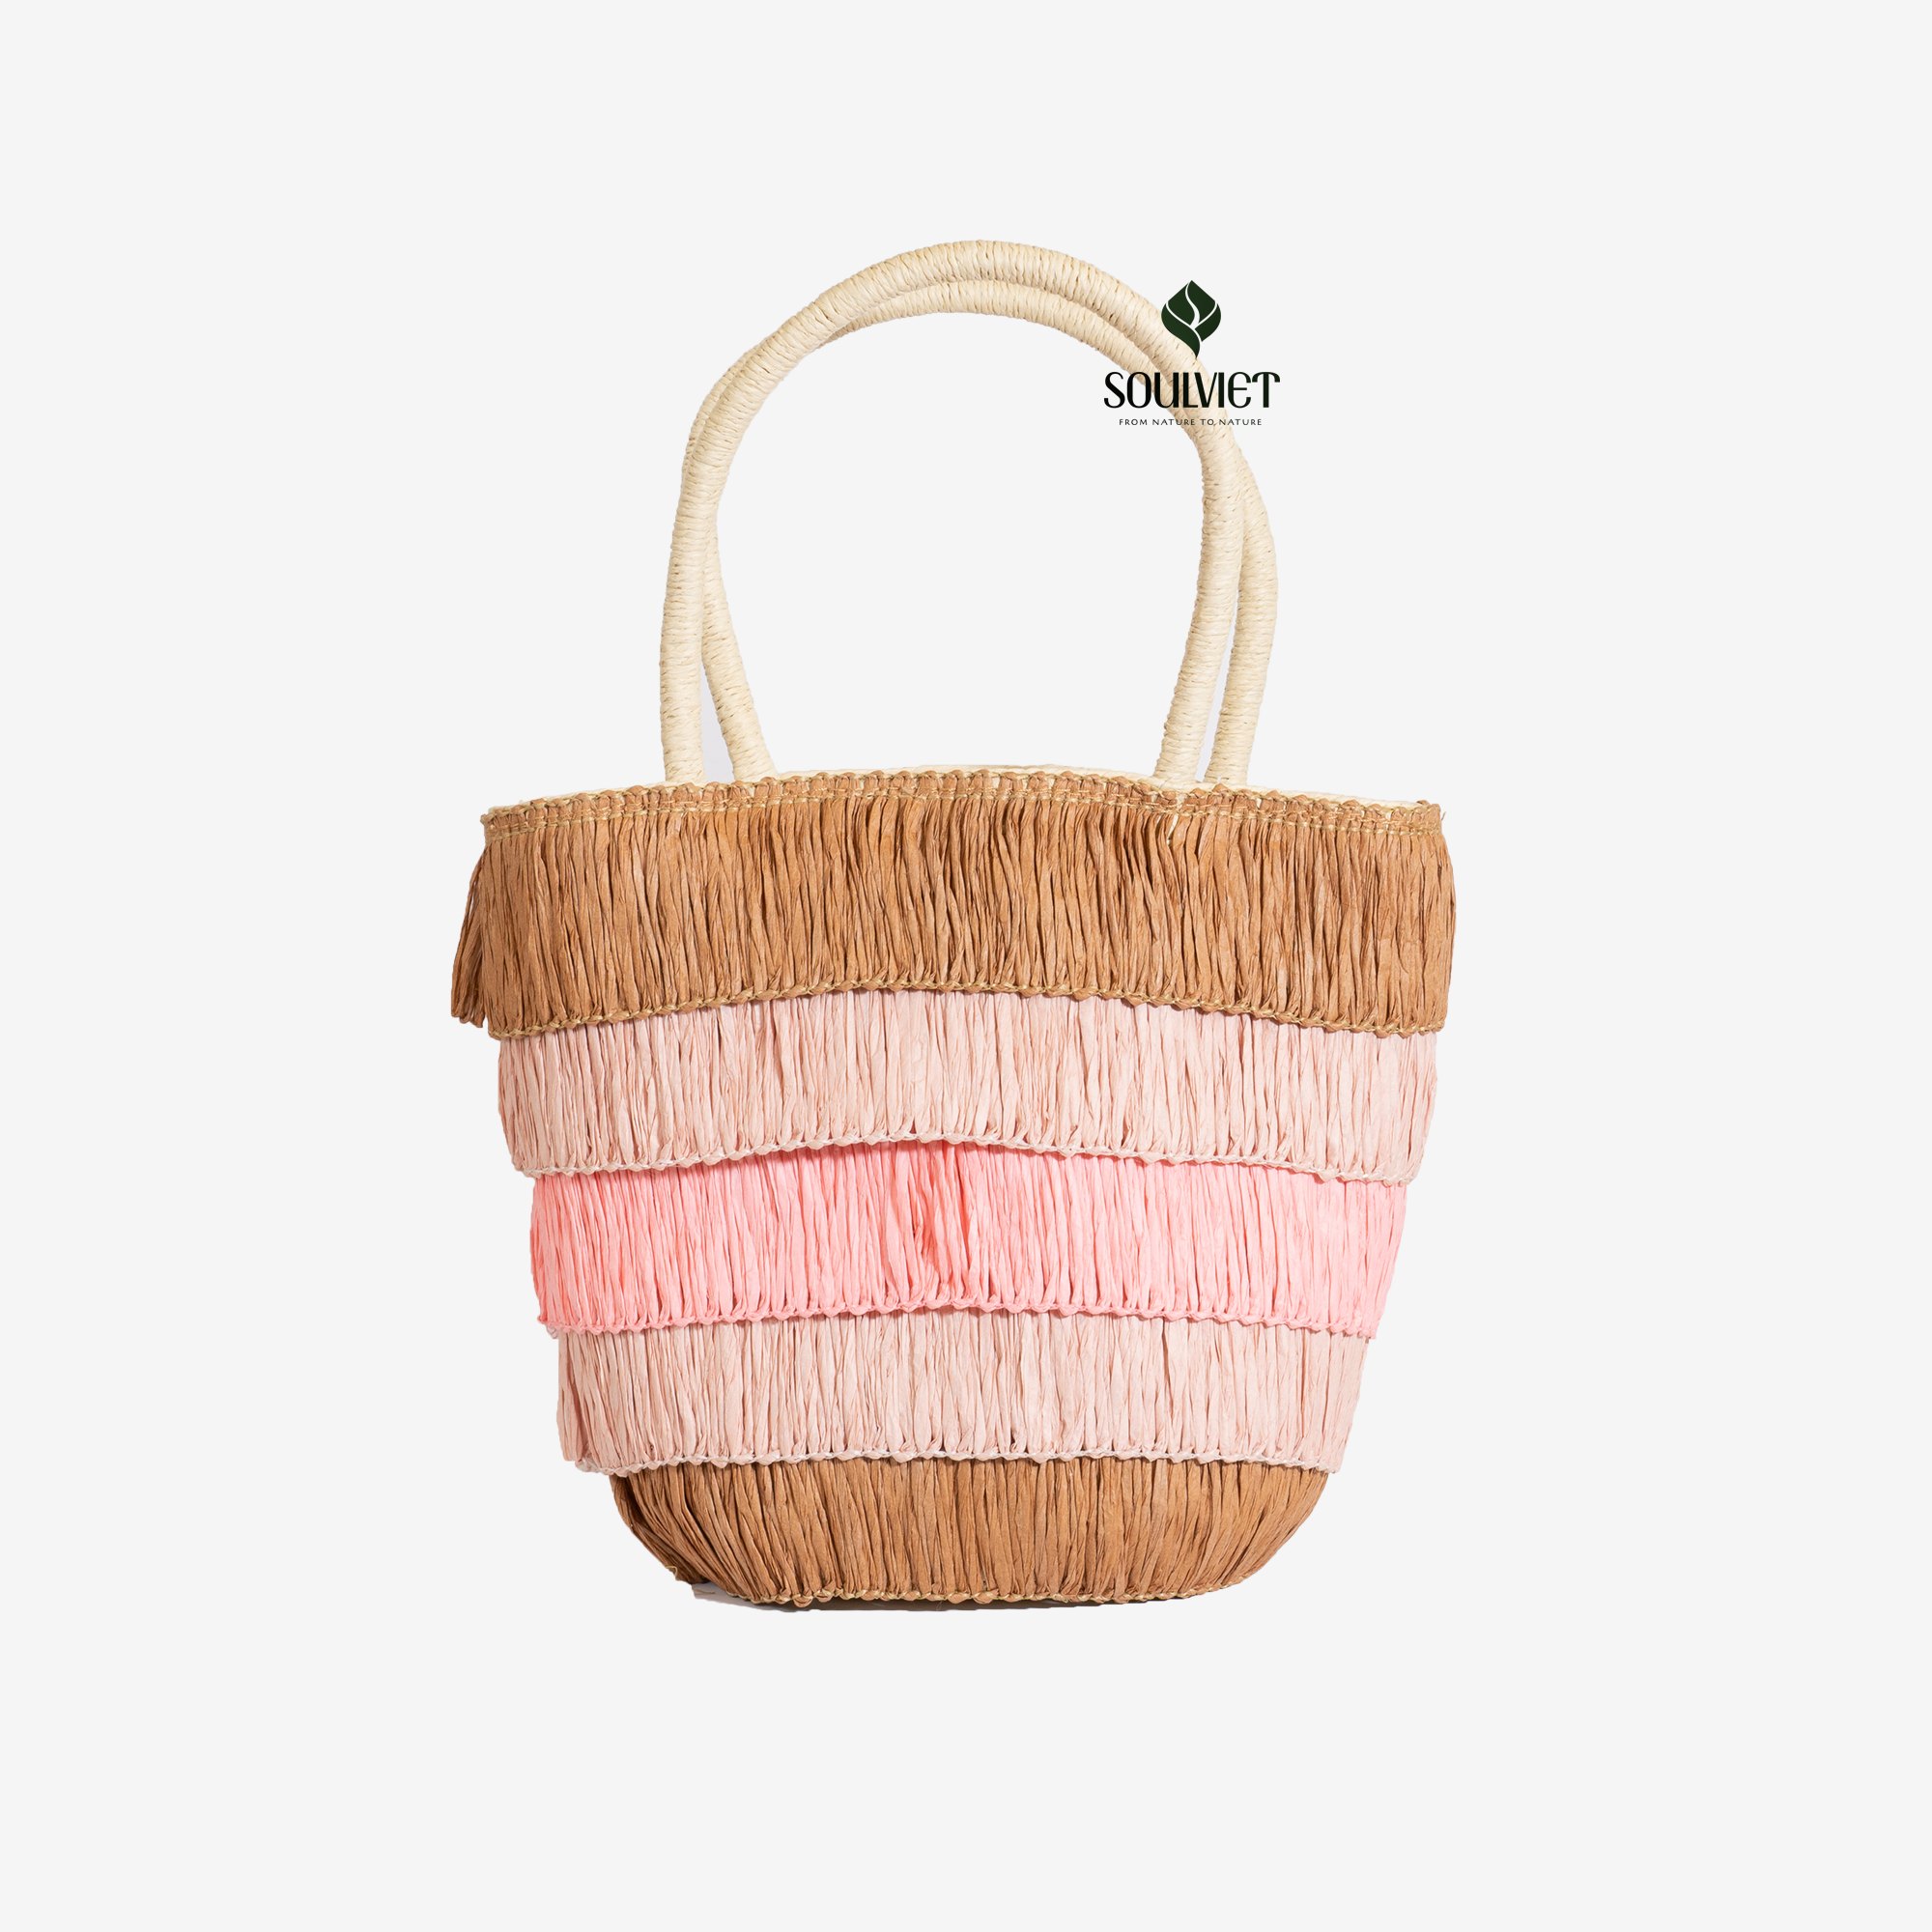 Fashionable Handbag with colorful Paper Fiber